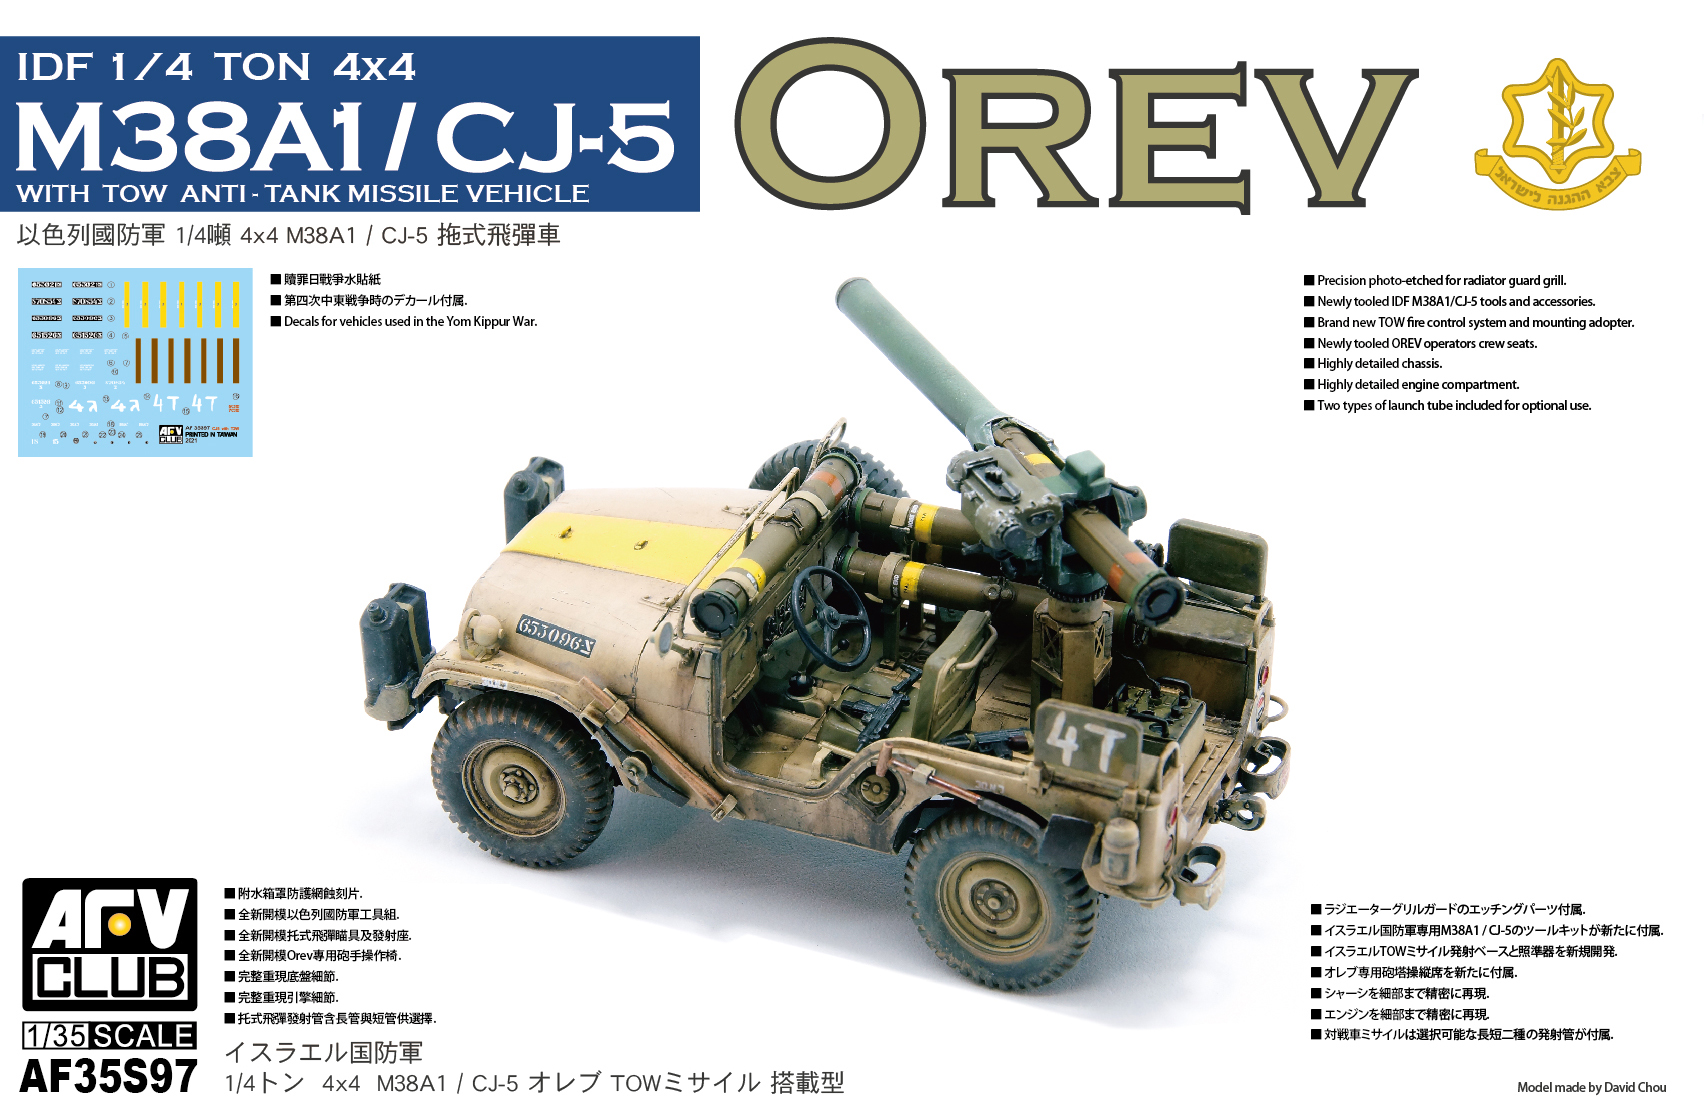 1/35 IDF M38A1/CJ-5 OREV 対戦車ミサイル搭載車<br/>